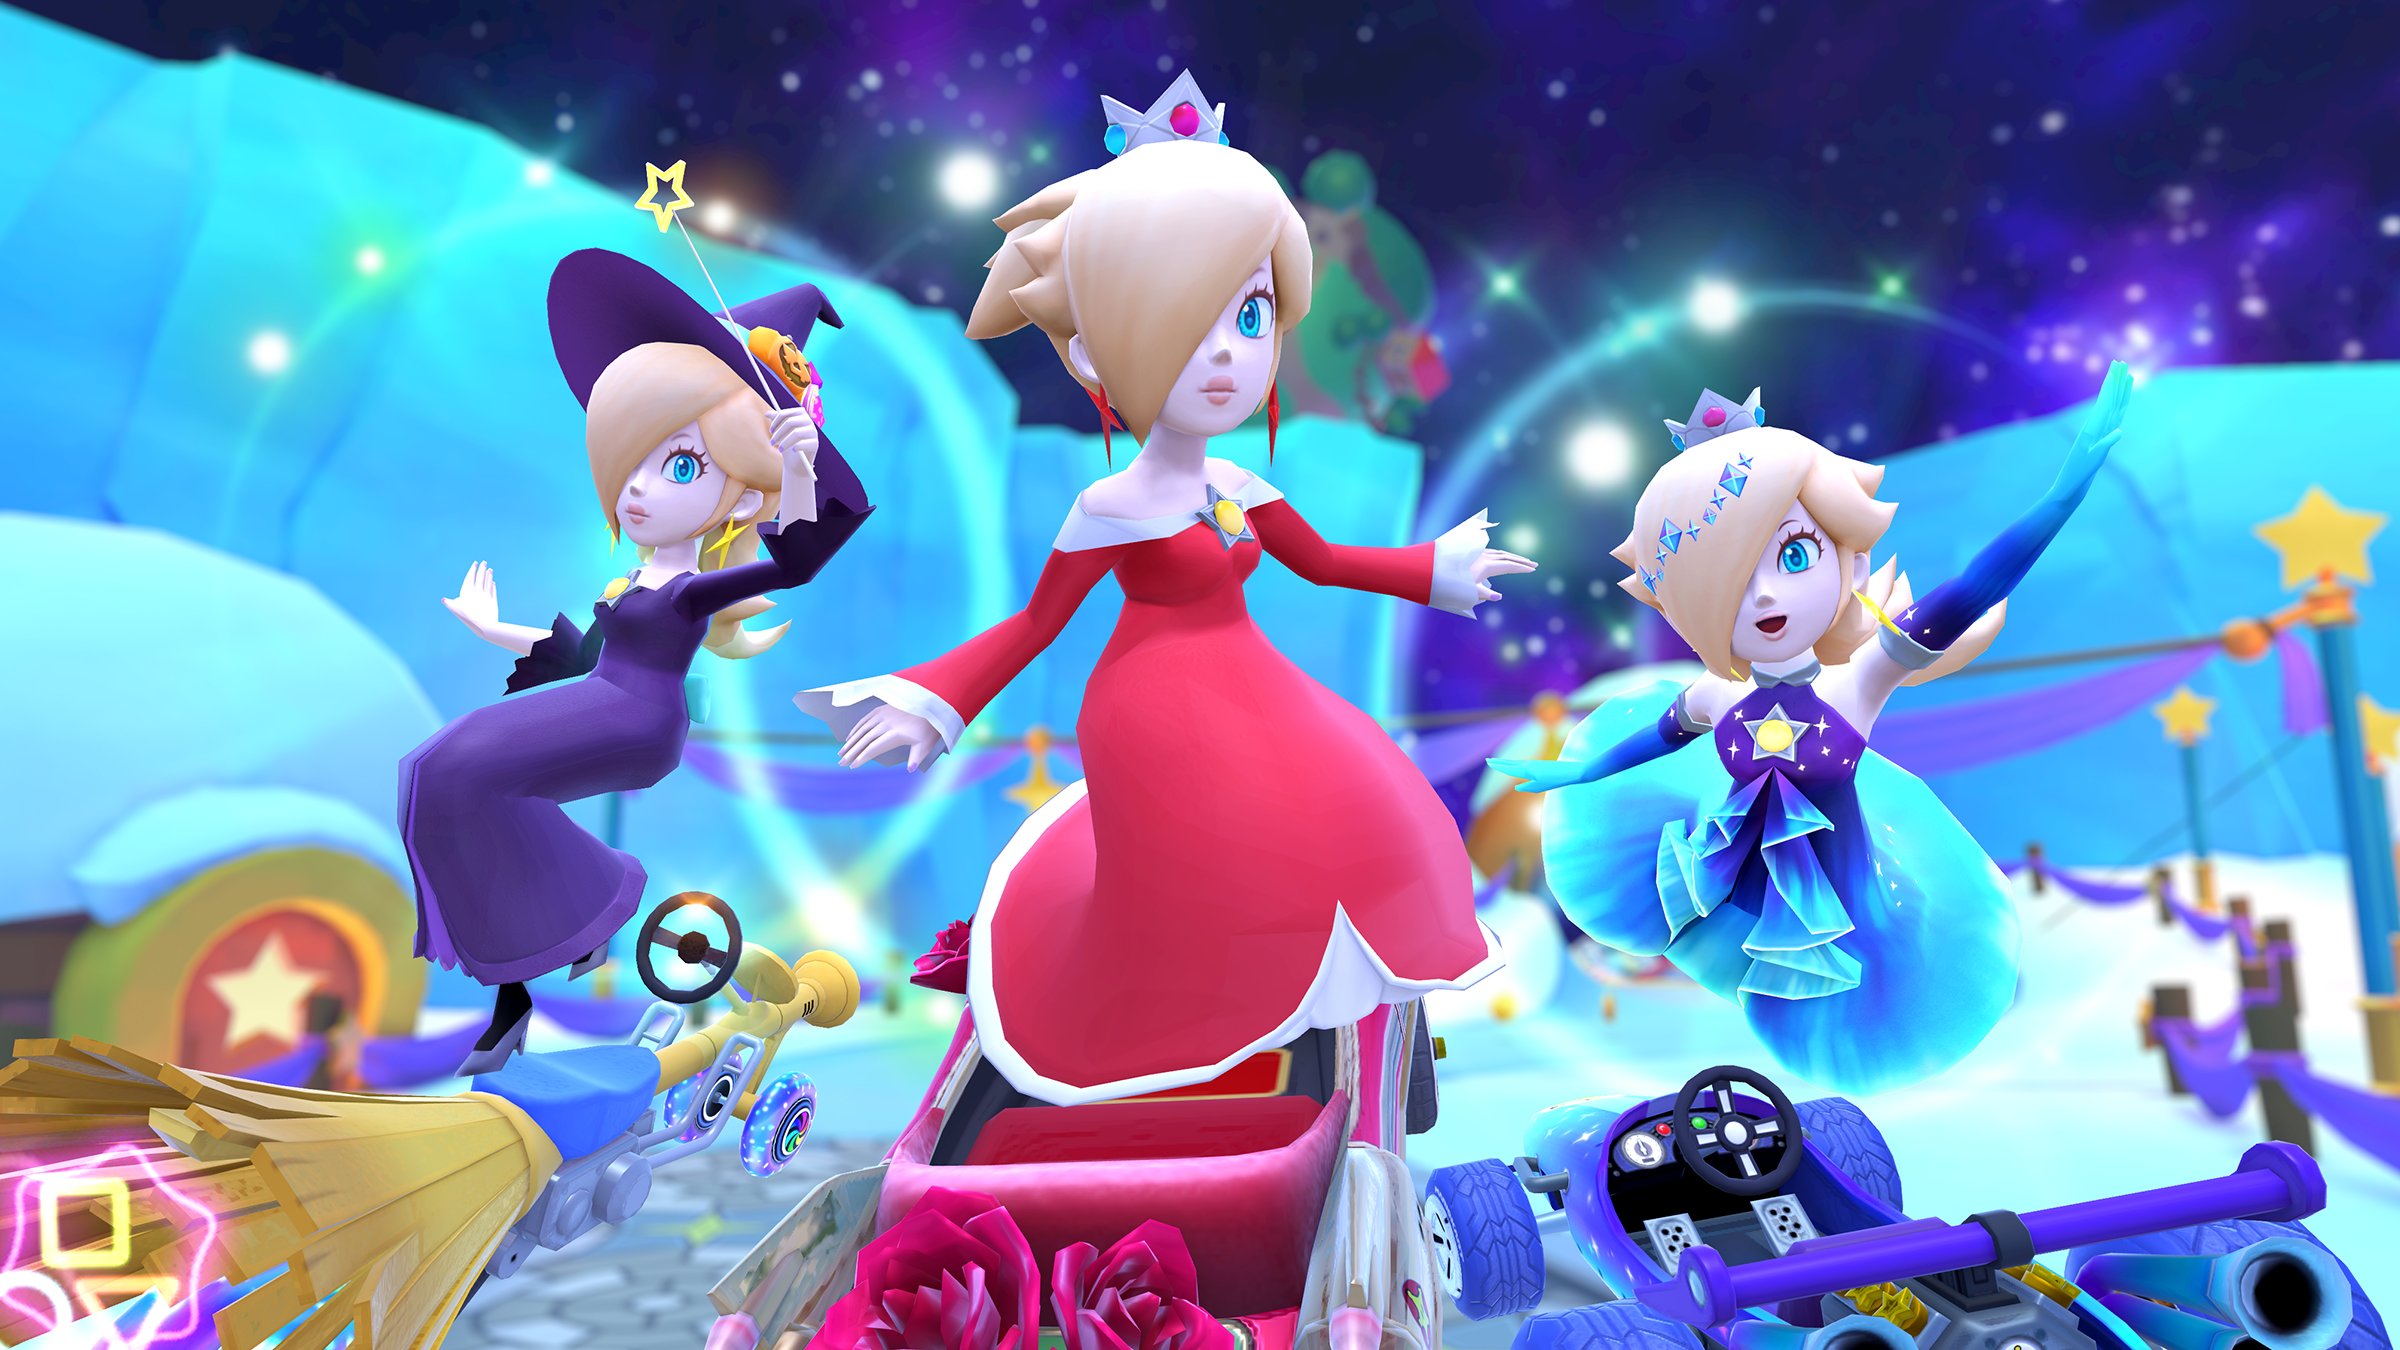 Fire Rosalina, Rosalina (Halloween), and Rosalina (Aurora) tricking on 3DS Rosalina's Ice World